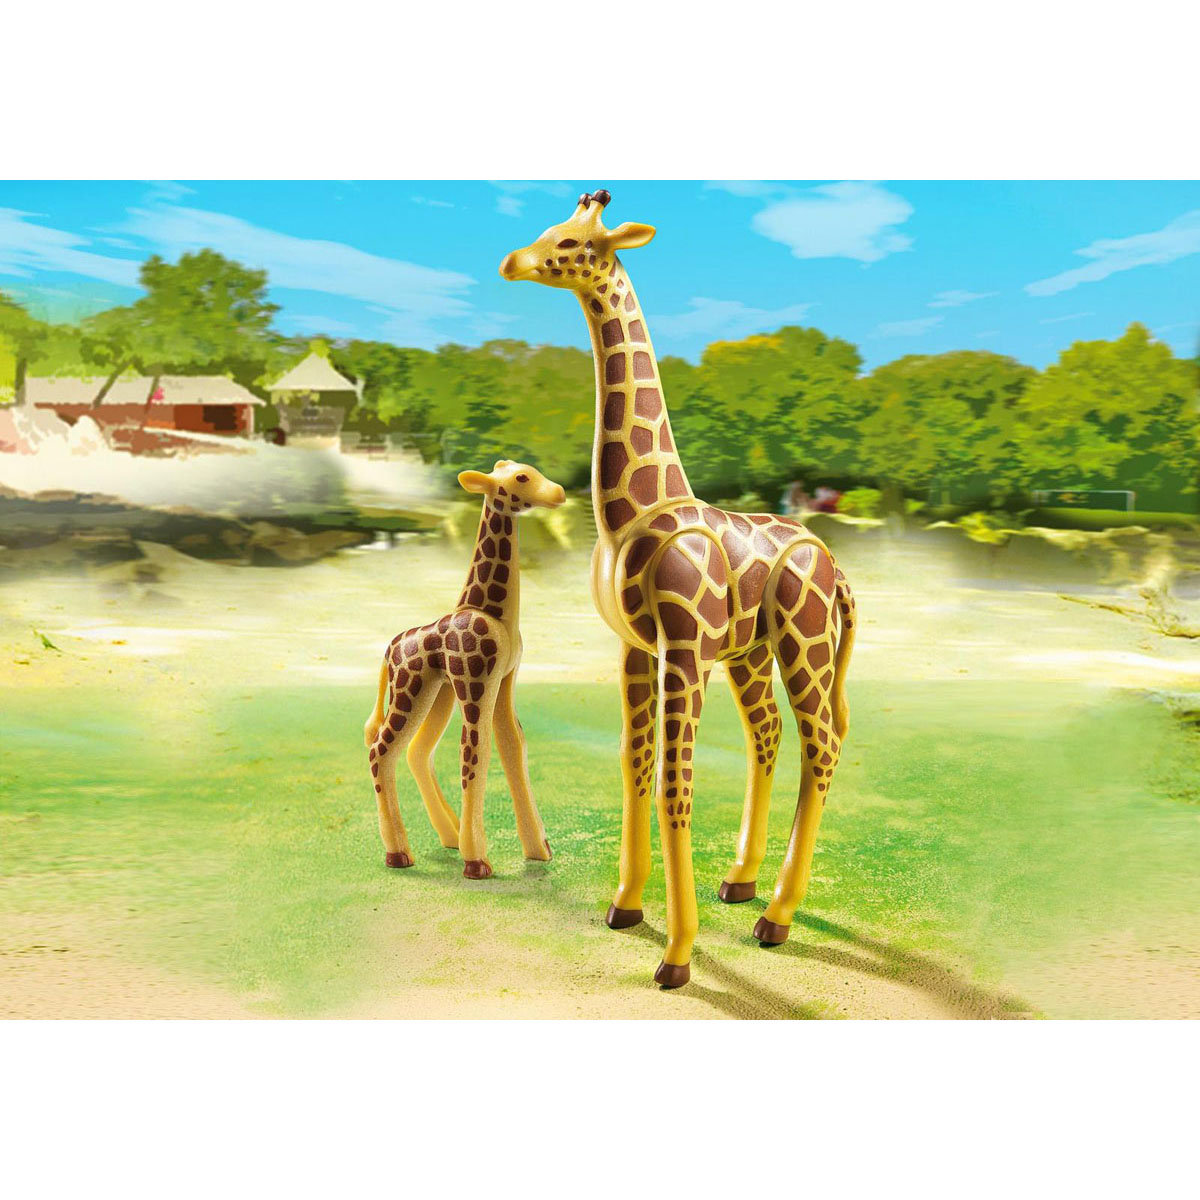 Playmobil Конструктор Жираф со своим детенышем жирафом 6640pm - фото 3